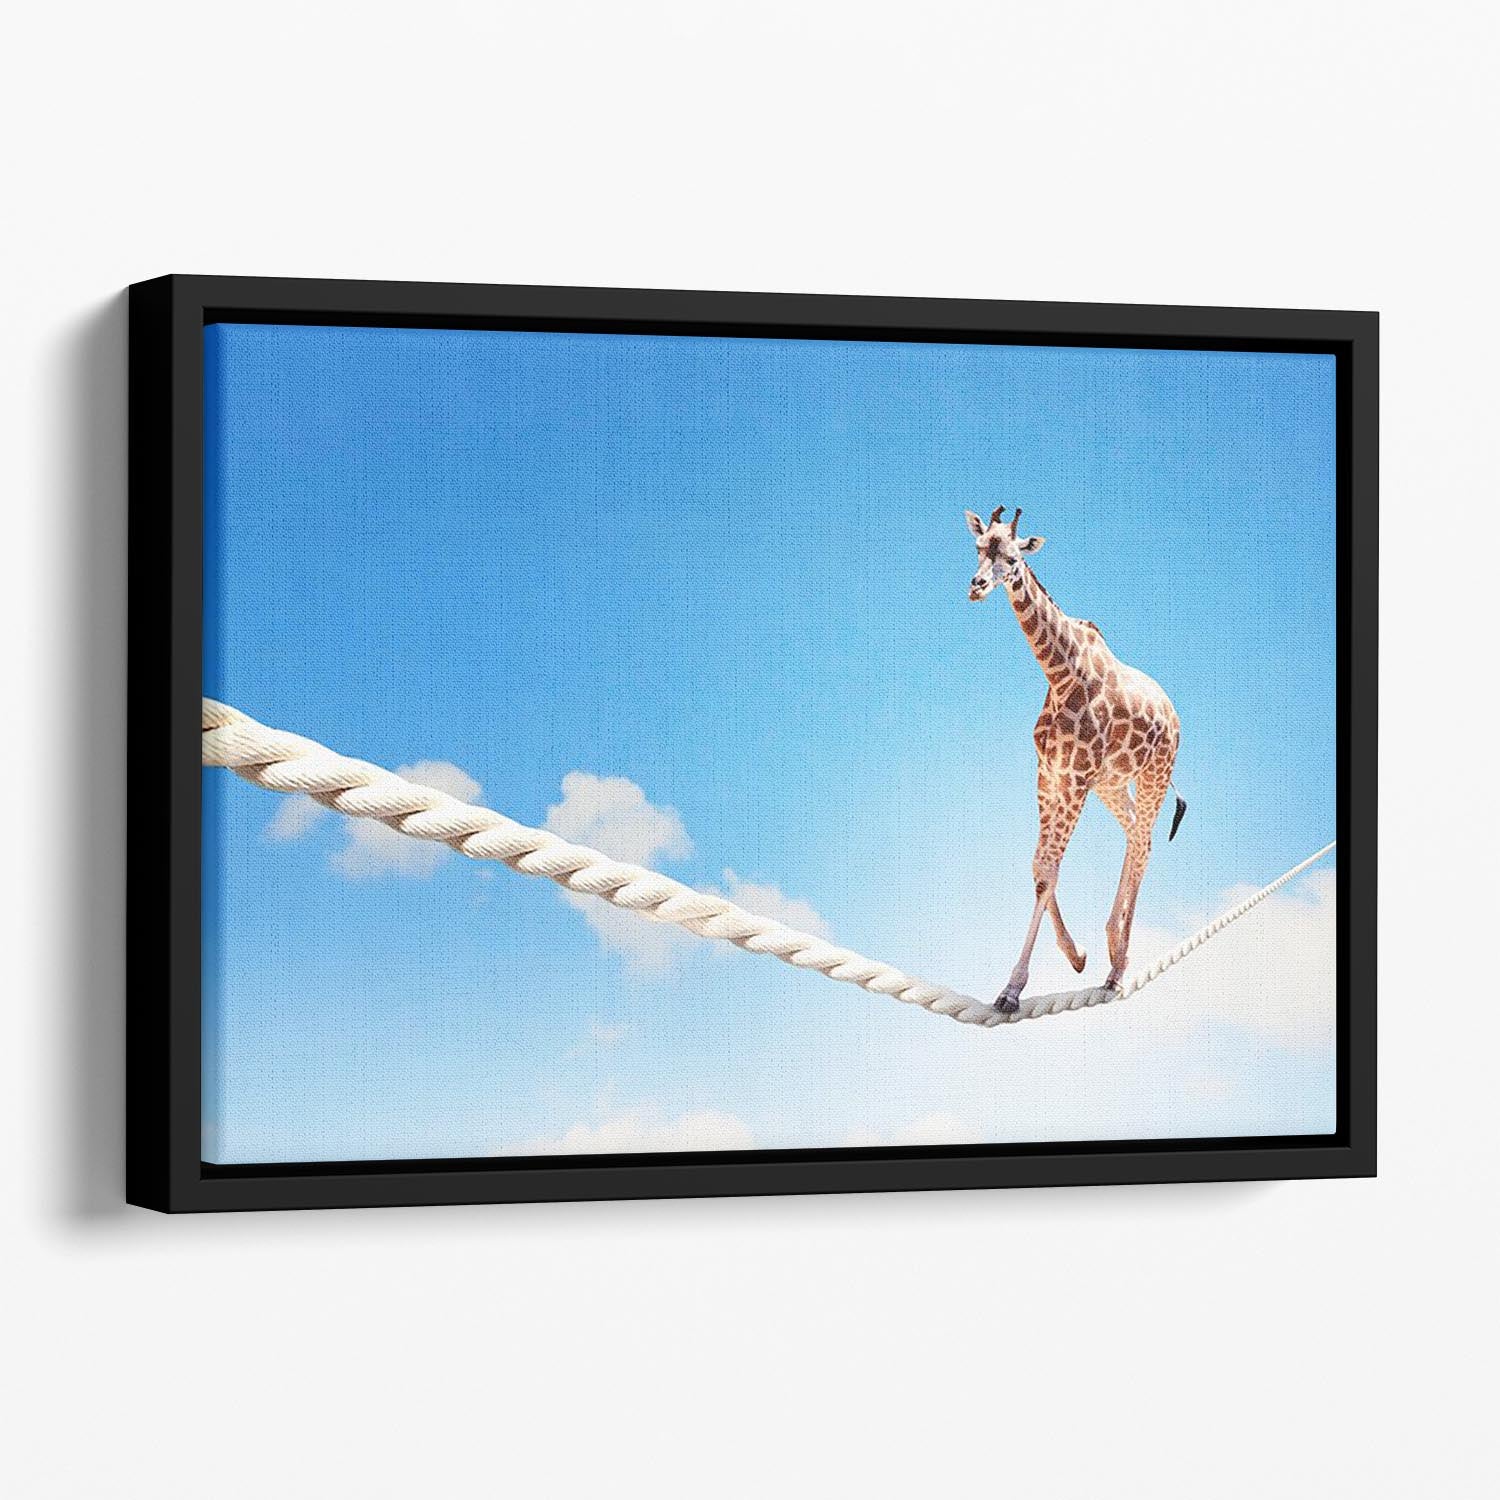 Image of giraffe walking on rope high in sky Floating Framed Canvas - Canvas Art Rocks - 1